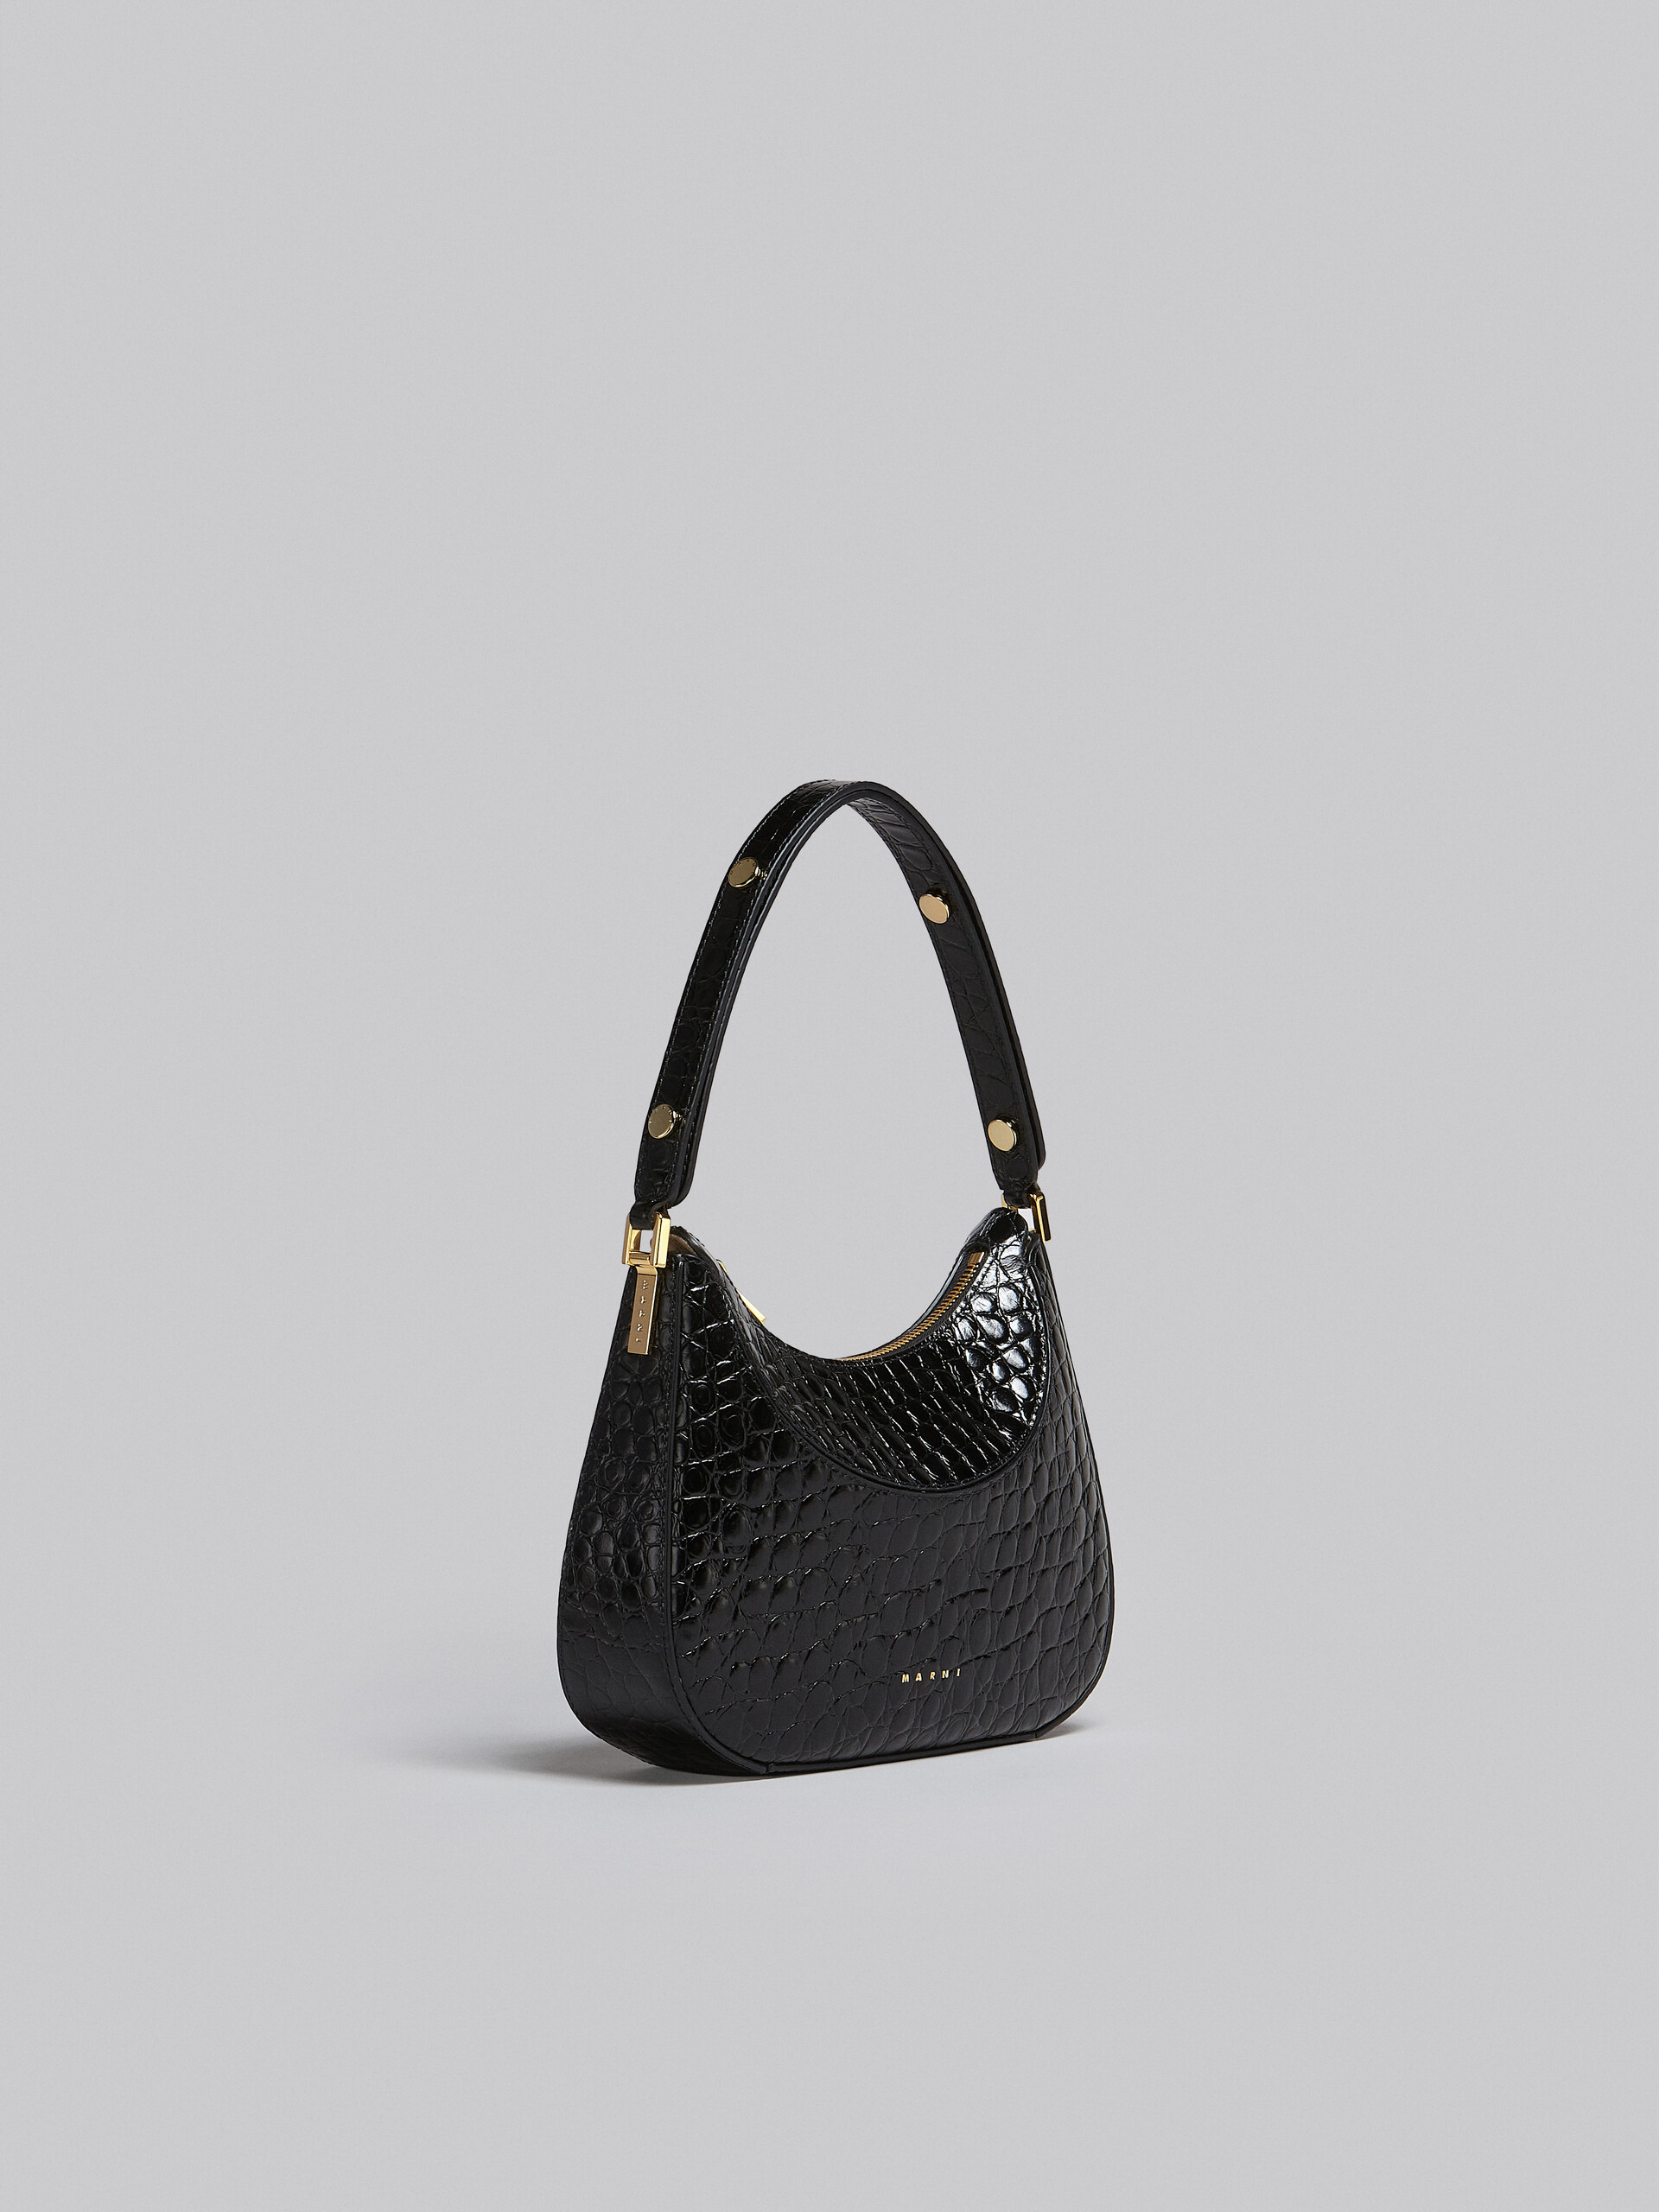 Milano Mini Bag in black croco print leather - Handbag - Image 5